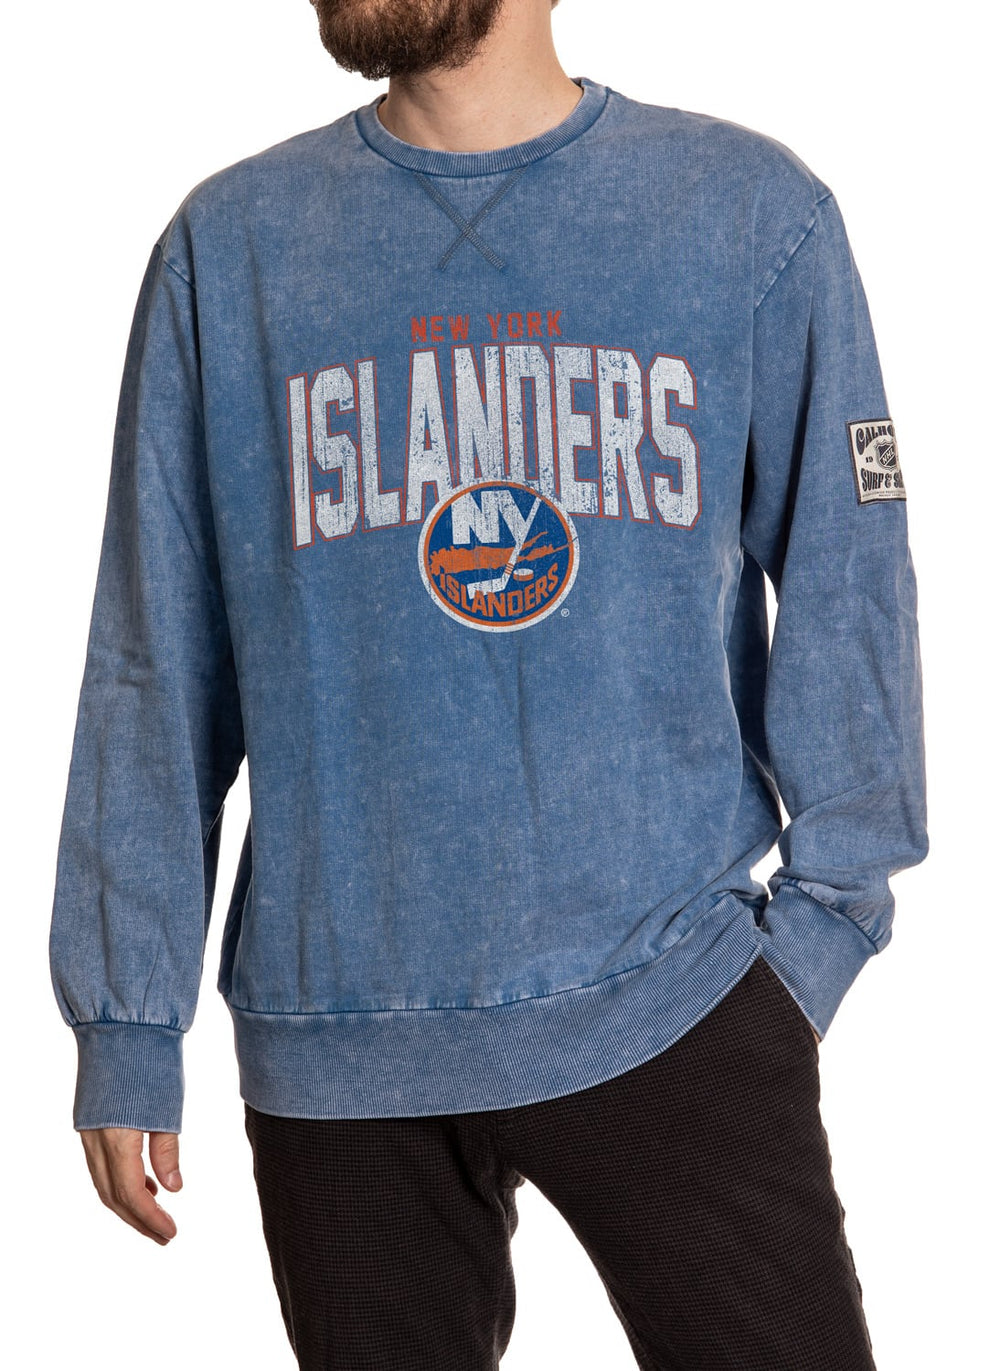 NHL New York Islanders Hockey Can't Stop Vs Women's V-Neck T-Shirt